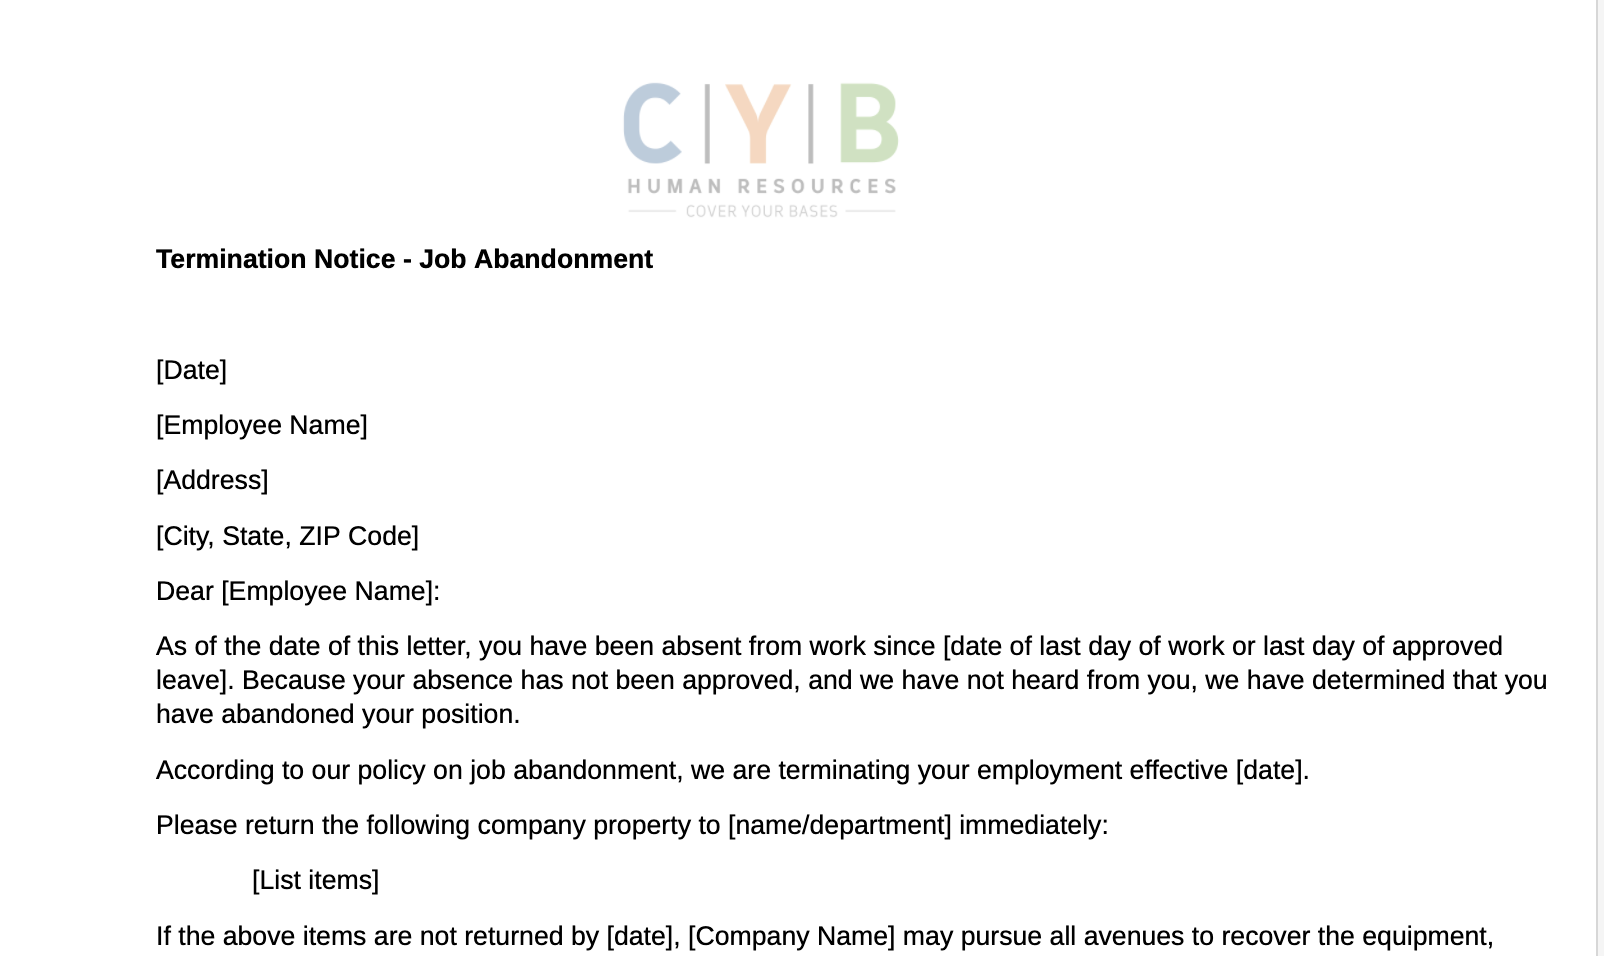 Termination Notice Job Abandonment CYB Human Resources